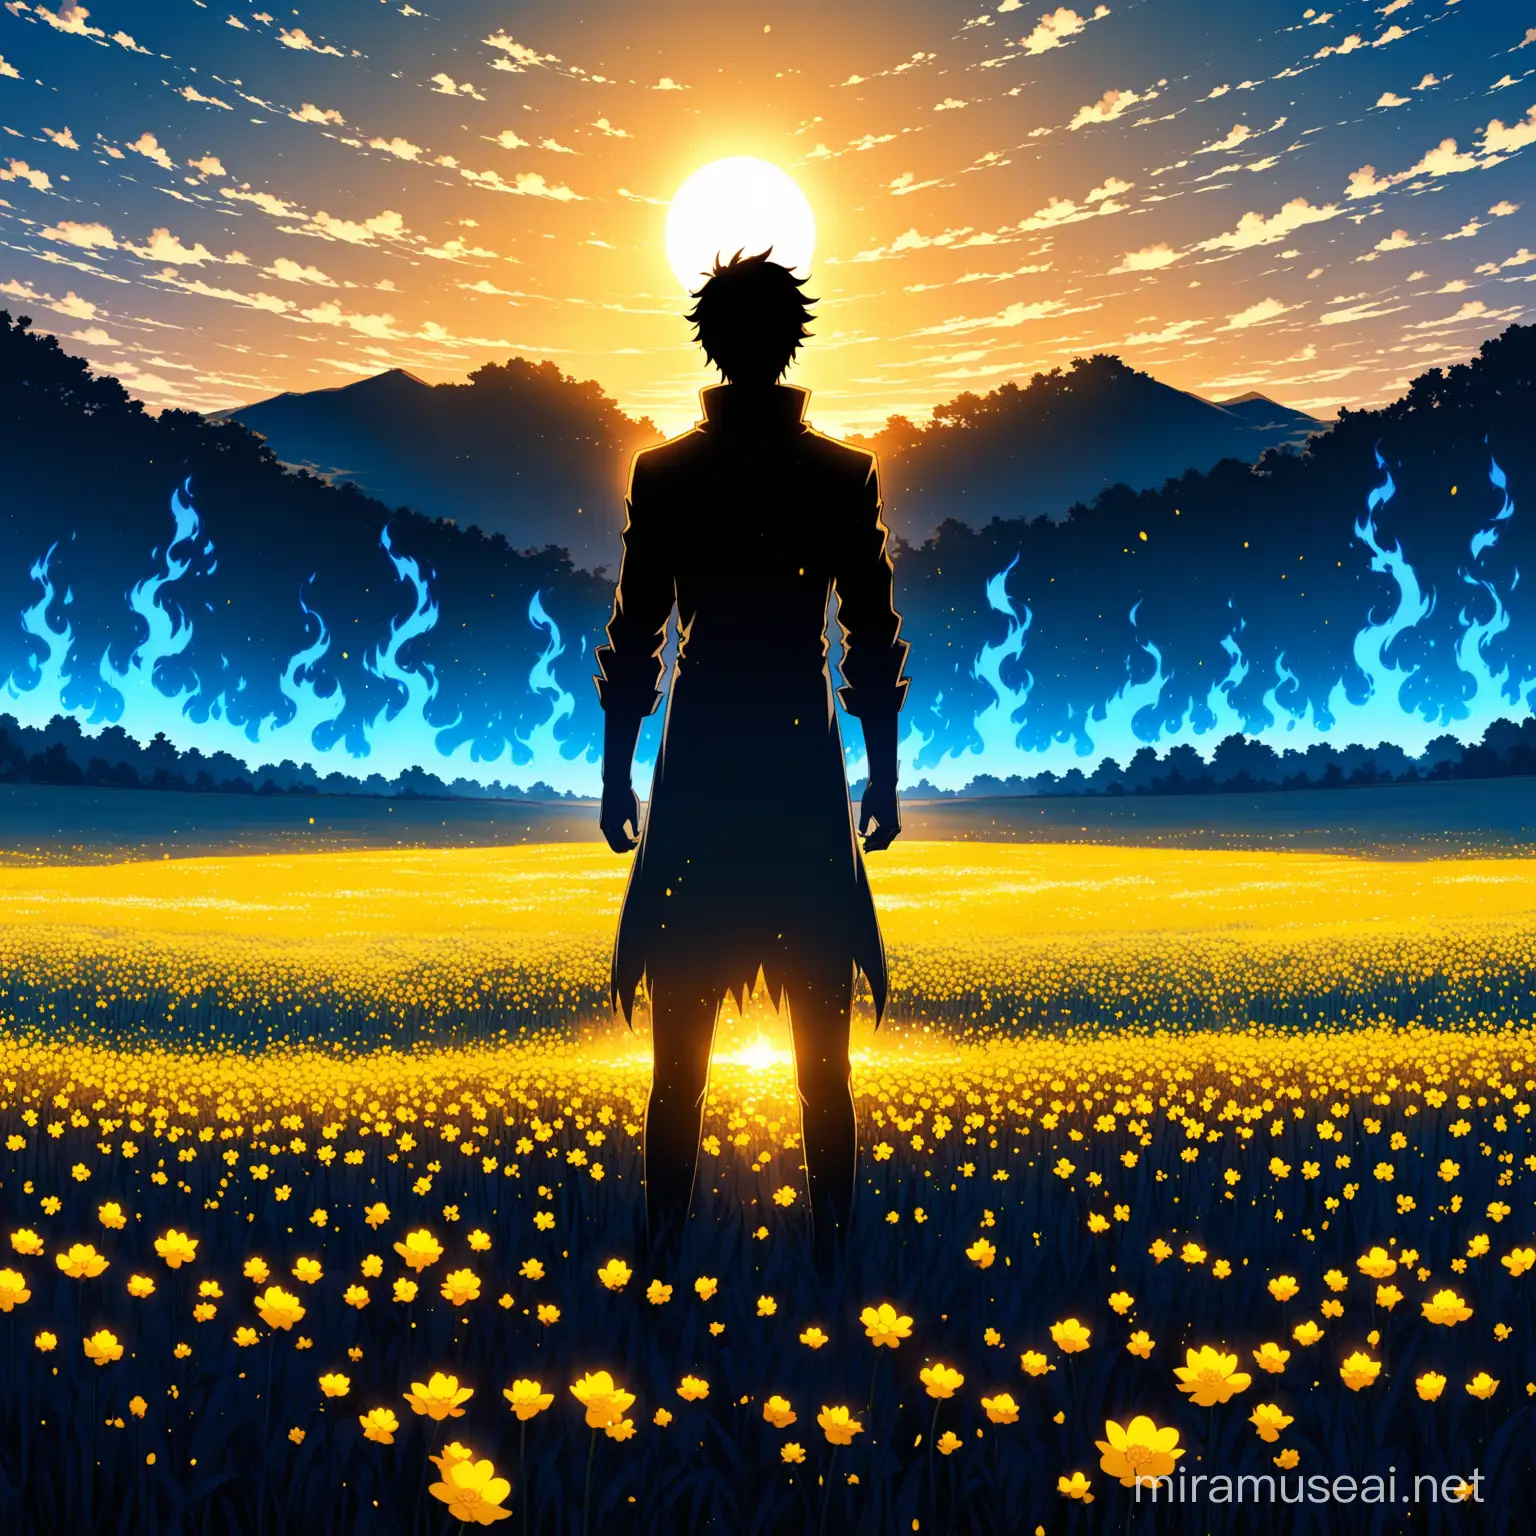 simple shadowy figure, male, anime style, standing on a yellow flower field, sunrise, sunbeams, flower field burns, blue flames